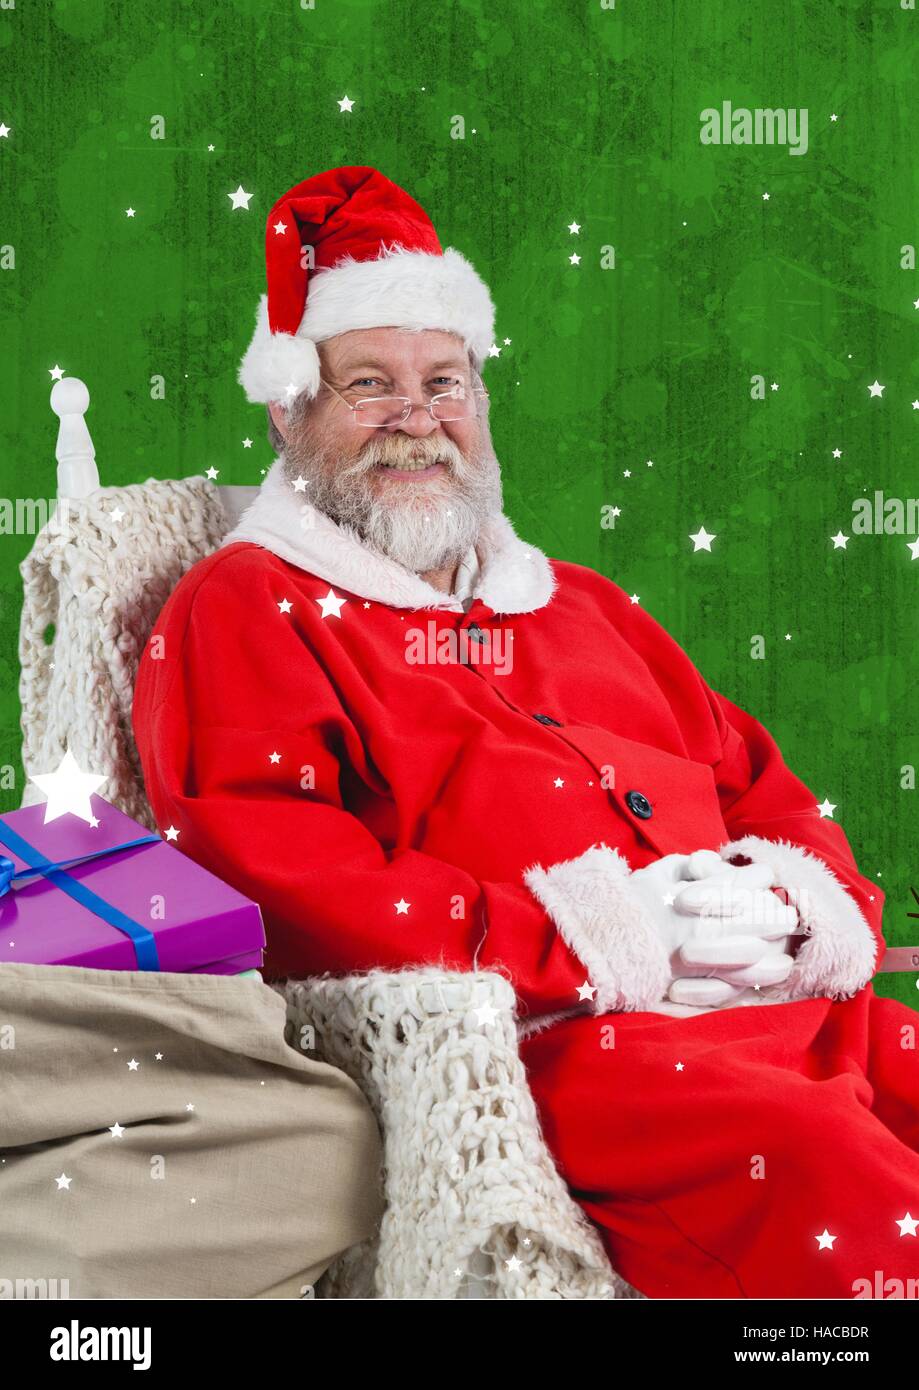 Smiling santa claus sitting with gift sack Stock Photo